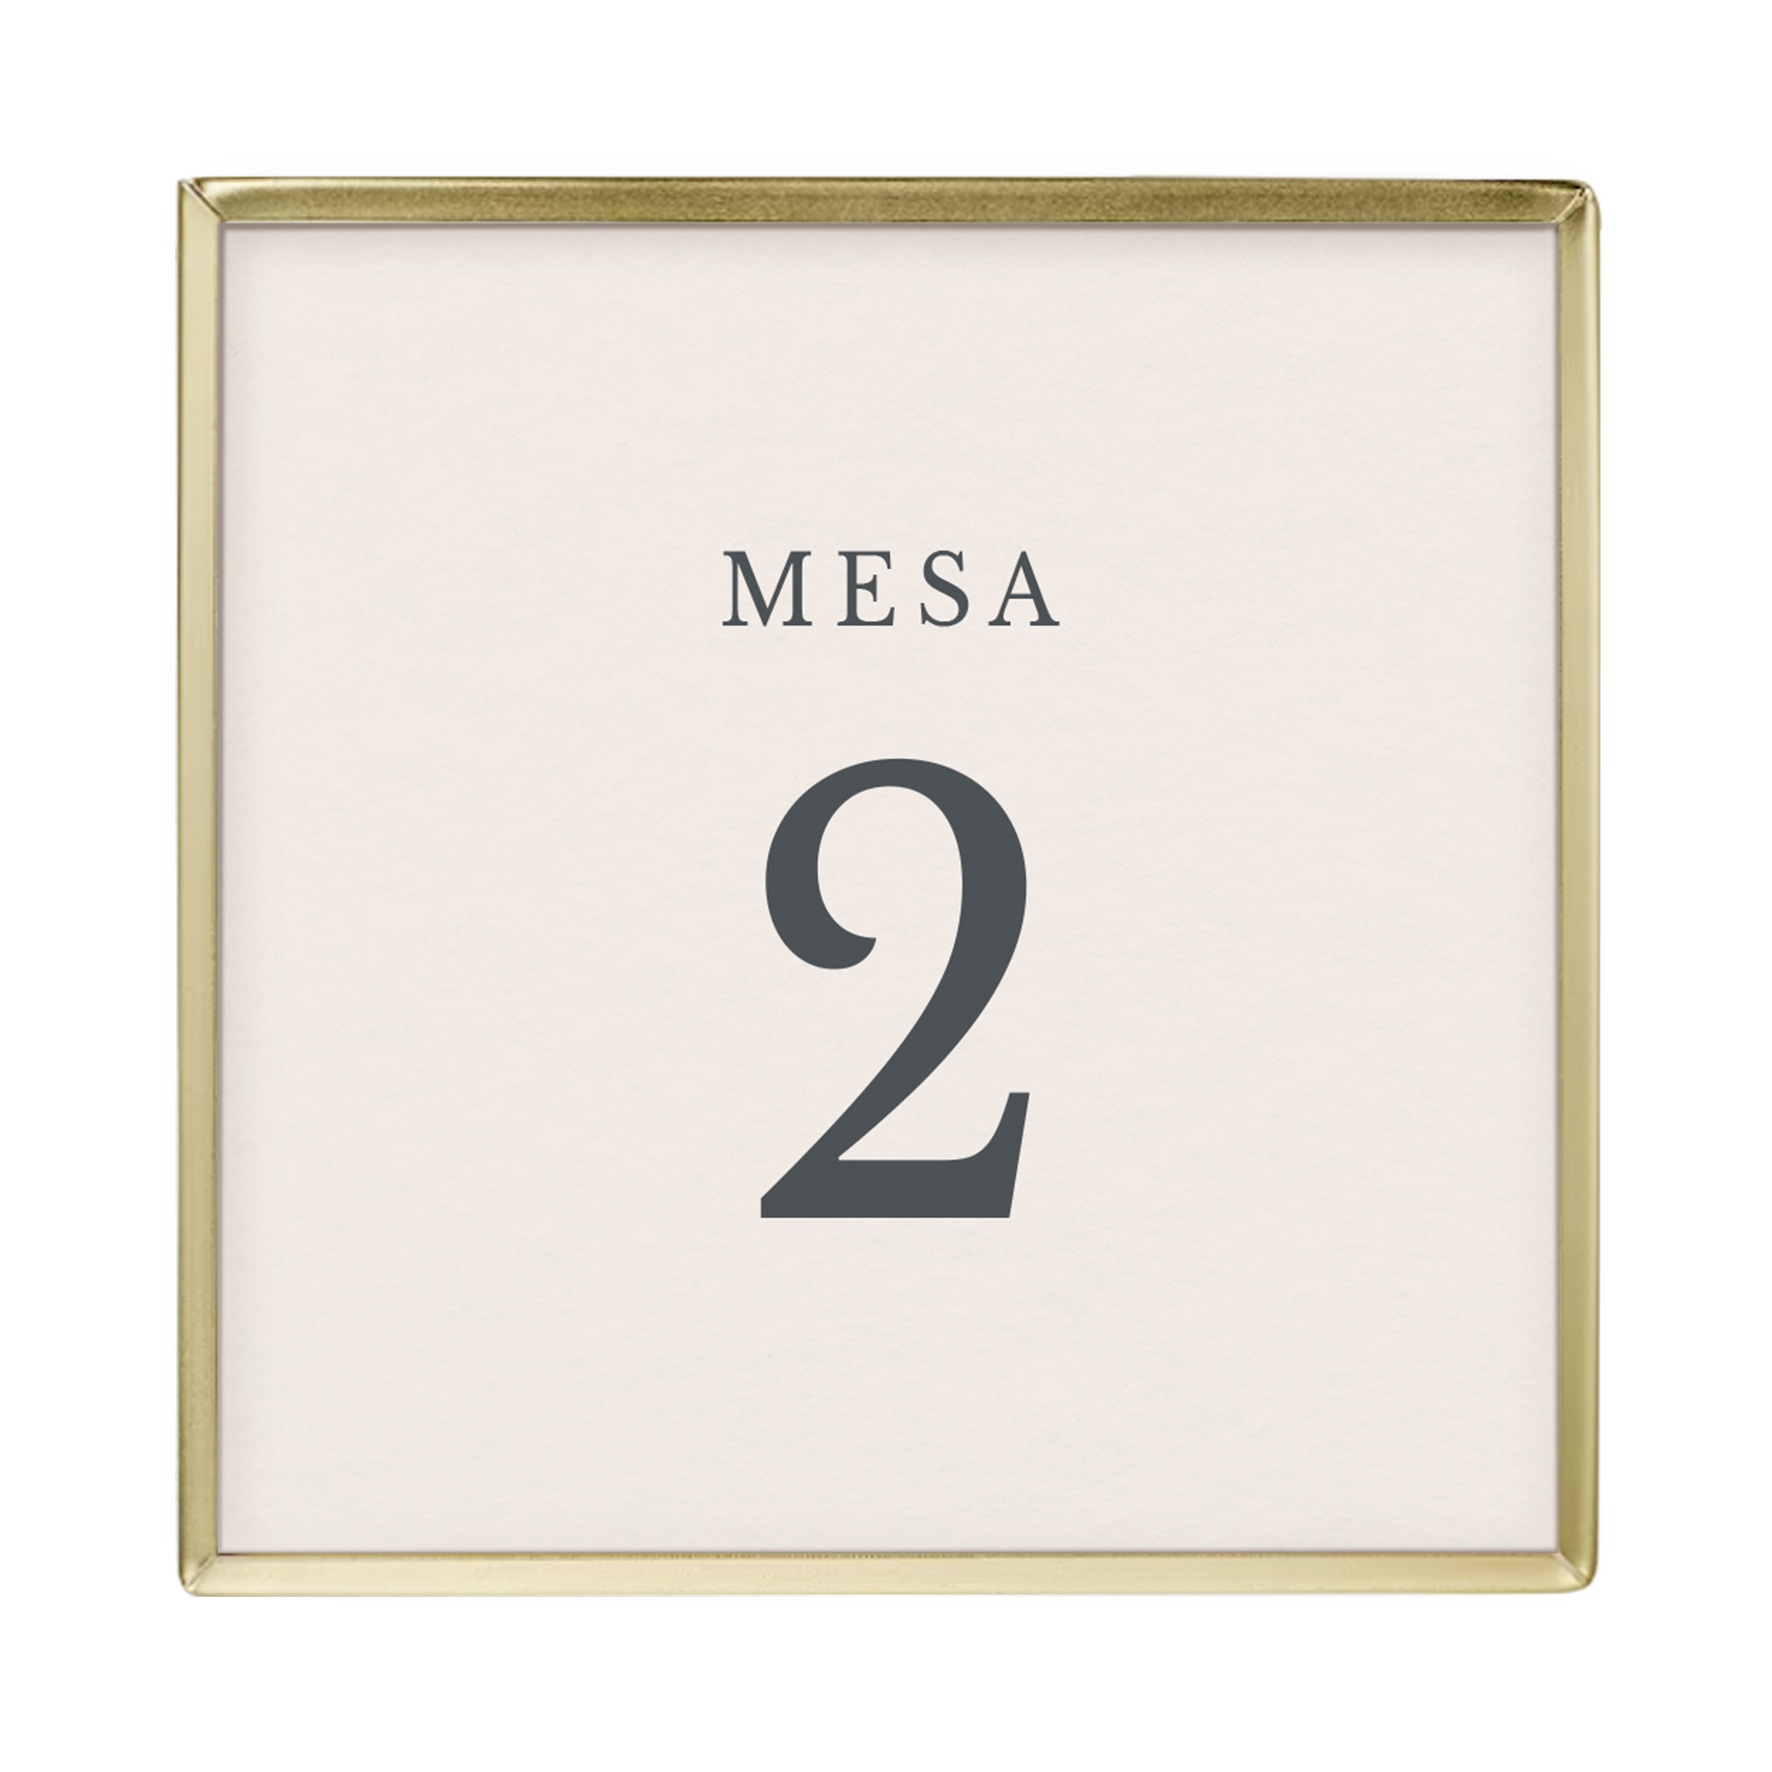 Elma-nº-mesa-16x16